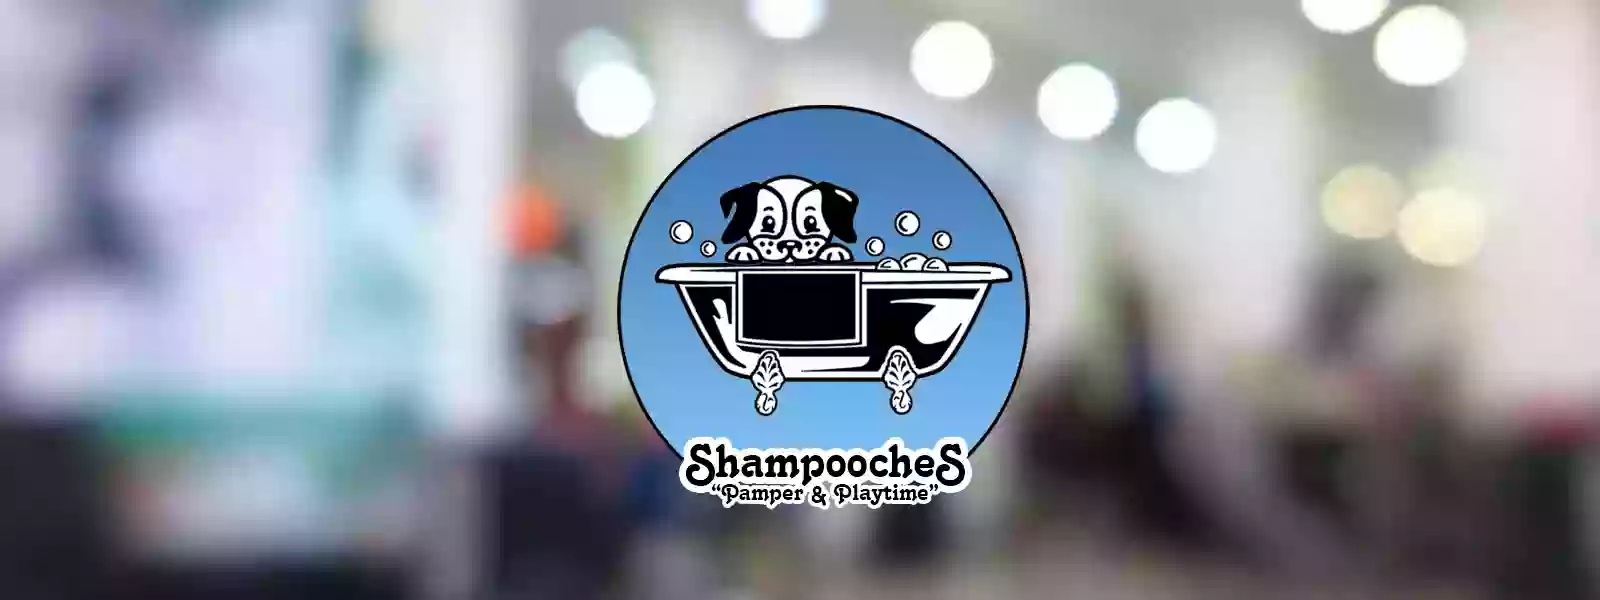 Shampooches Pamper & Playtime